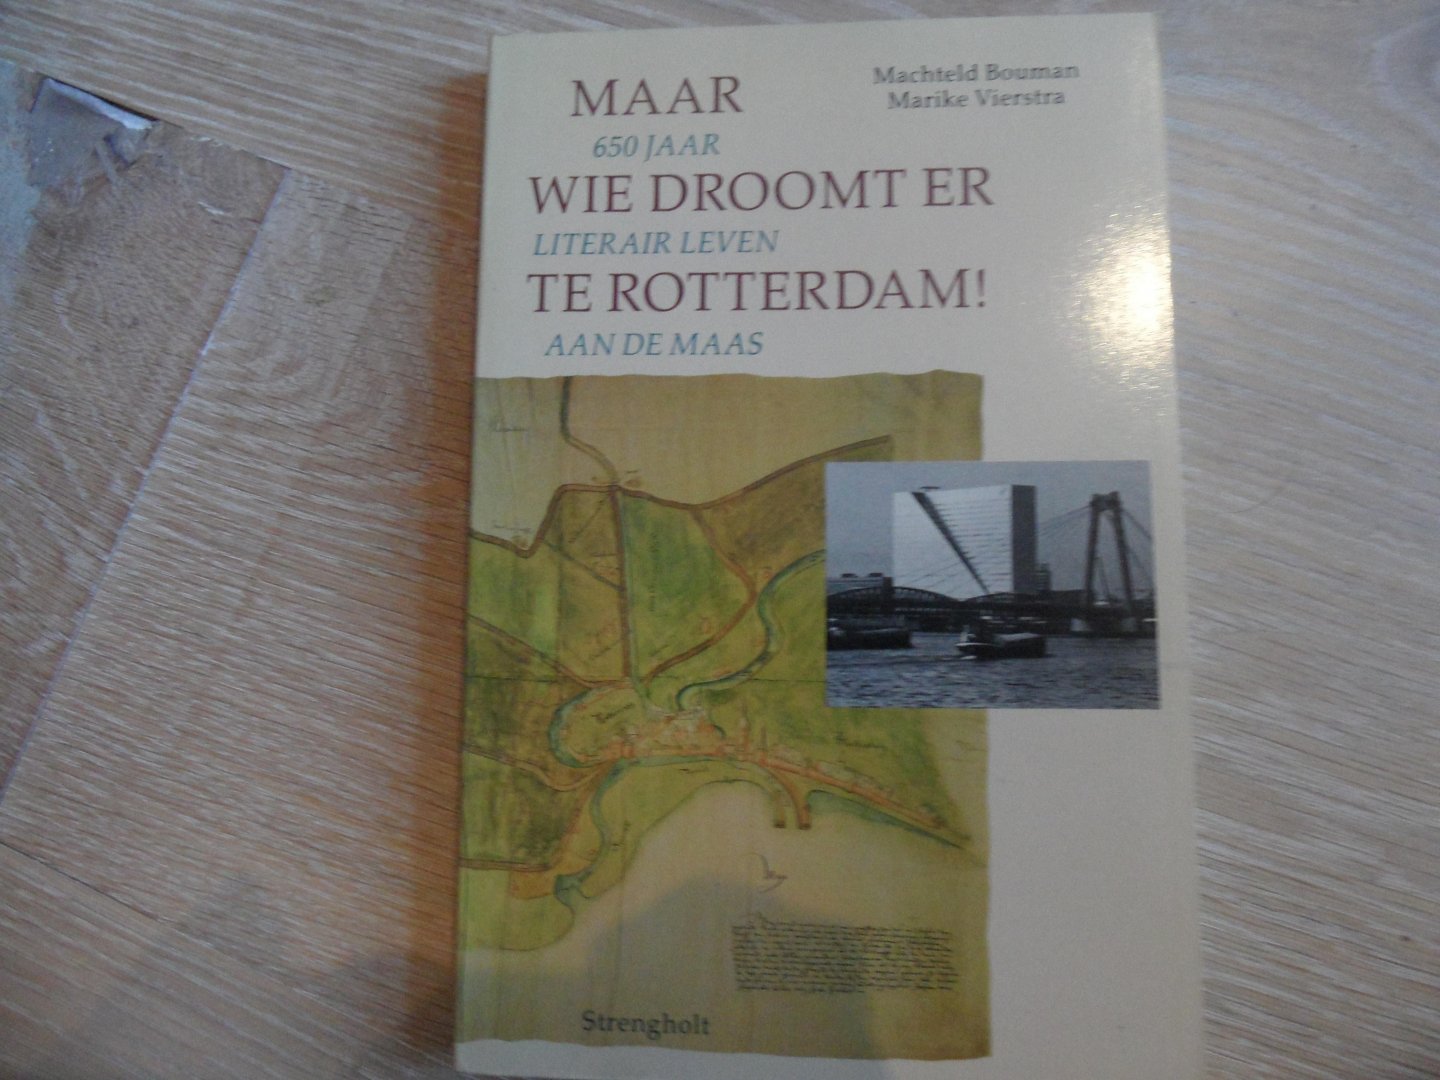 Bouman, Machterld & Vierstra, Marike - Maar wie droomt er te Rotterdam! 650 jaar literair leven aan de Maas